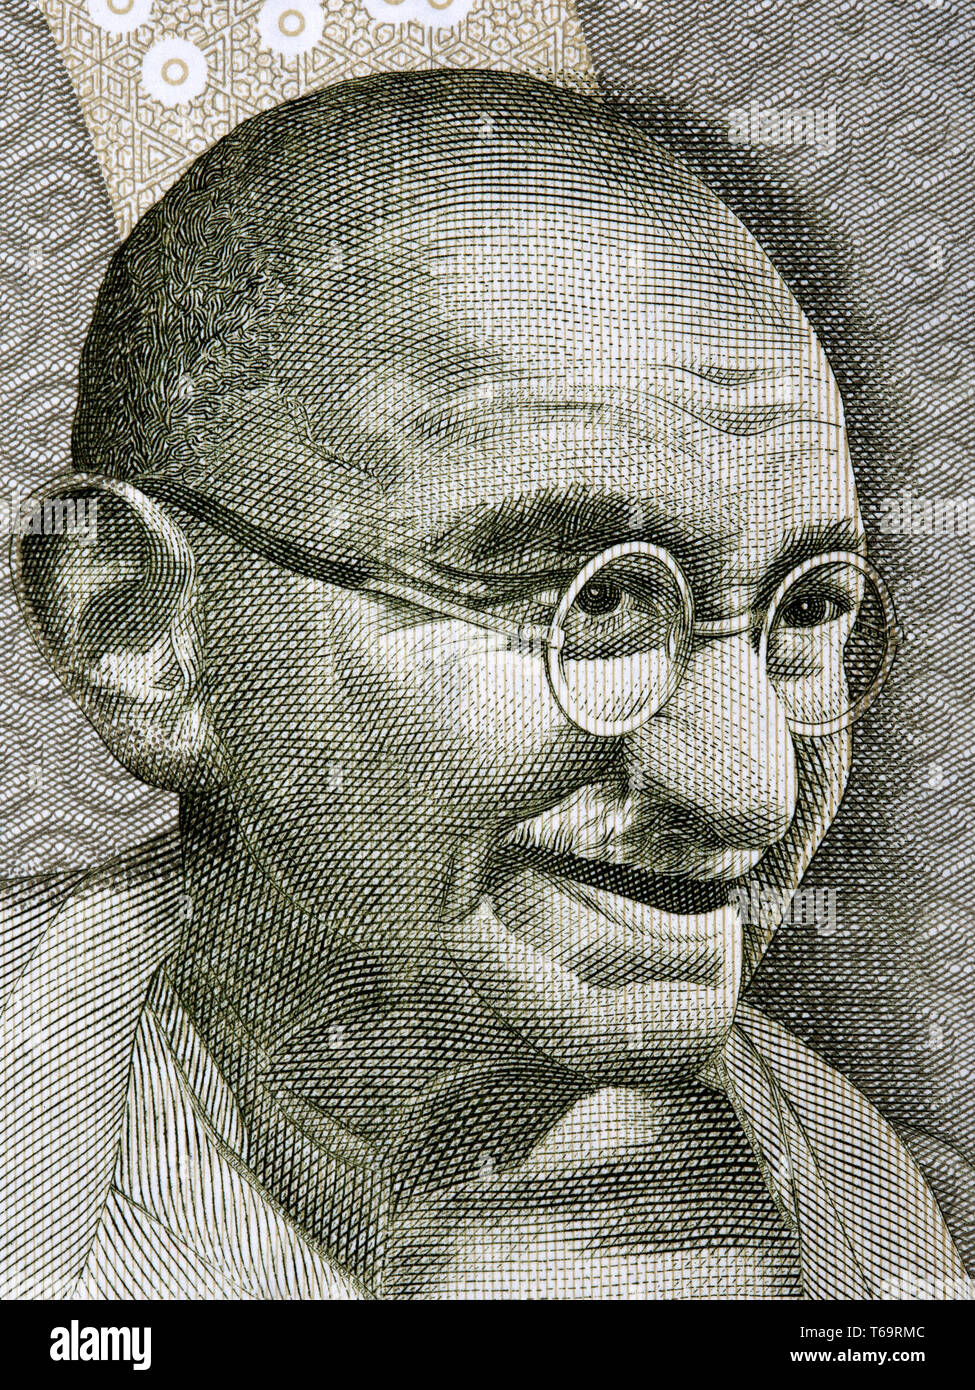 Mahatma Gandhi a portrait from Indian money Stock Photo